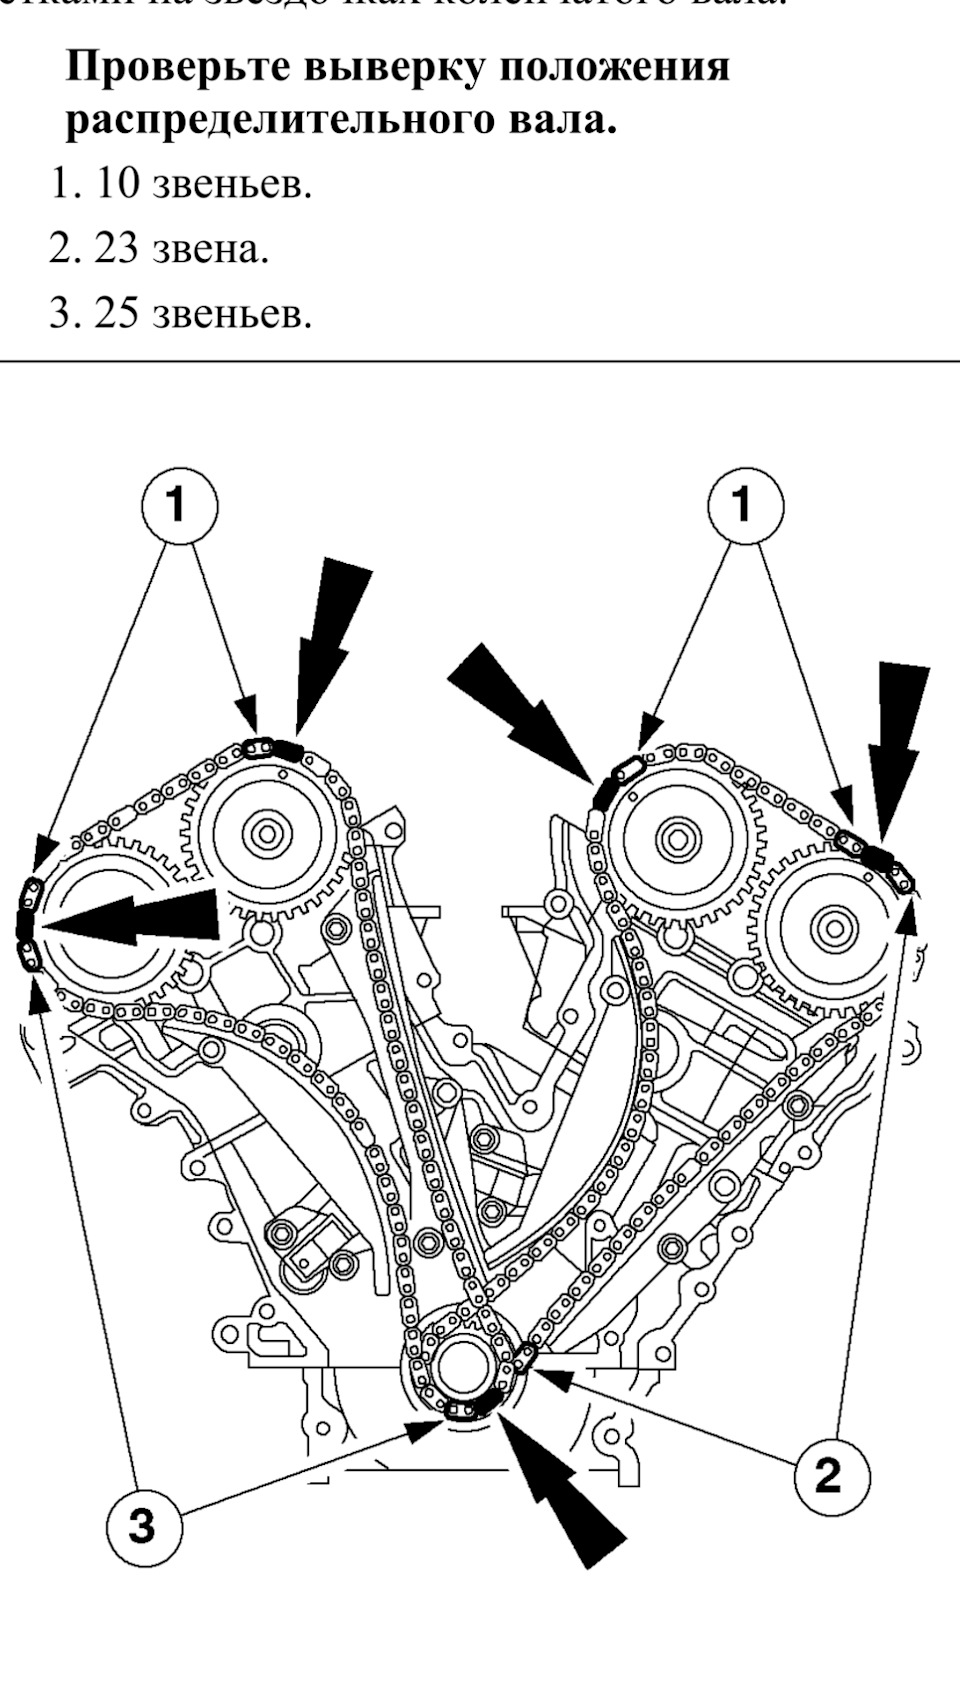 Двигатель Duratec HE 2,0/145 л.с., ч.2